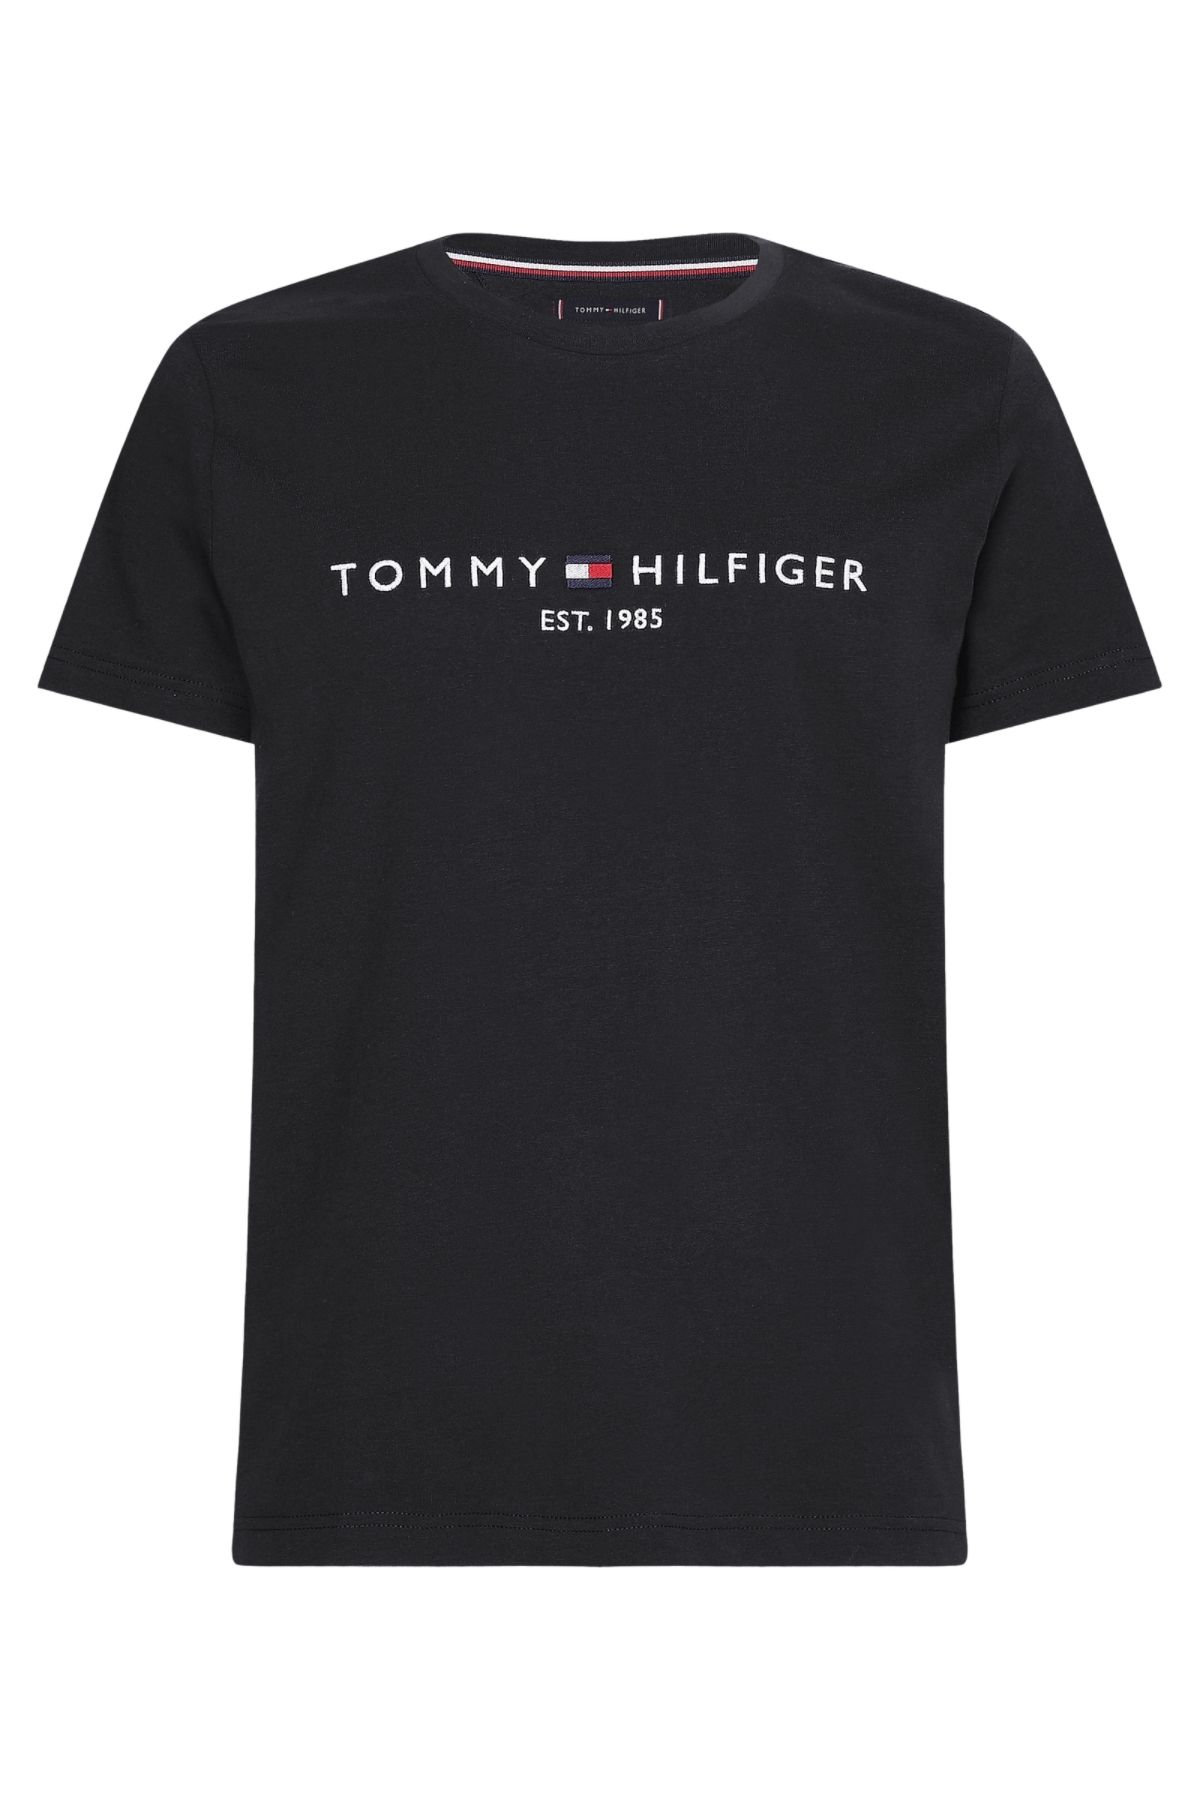 Tommy Hilfiger Erkek Siyah T-shirt Mw0mw11465bas-siyah